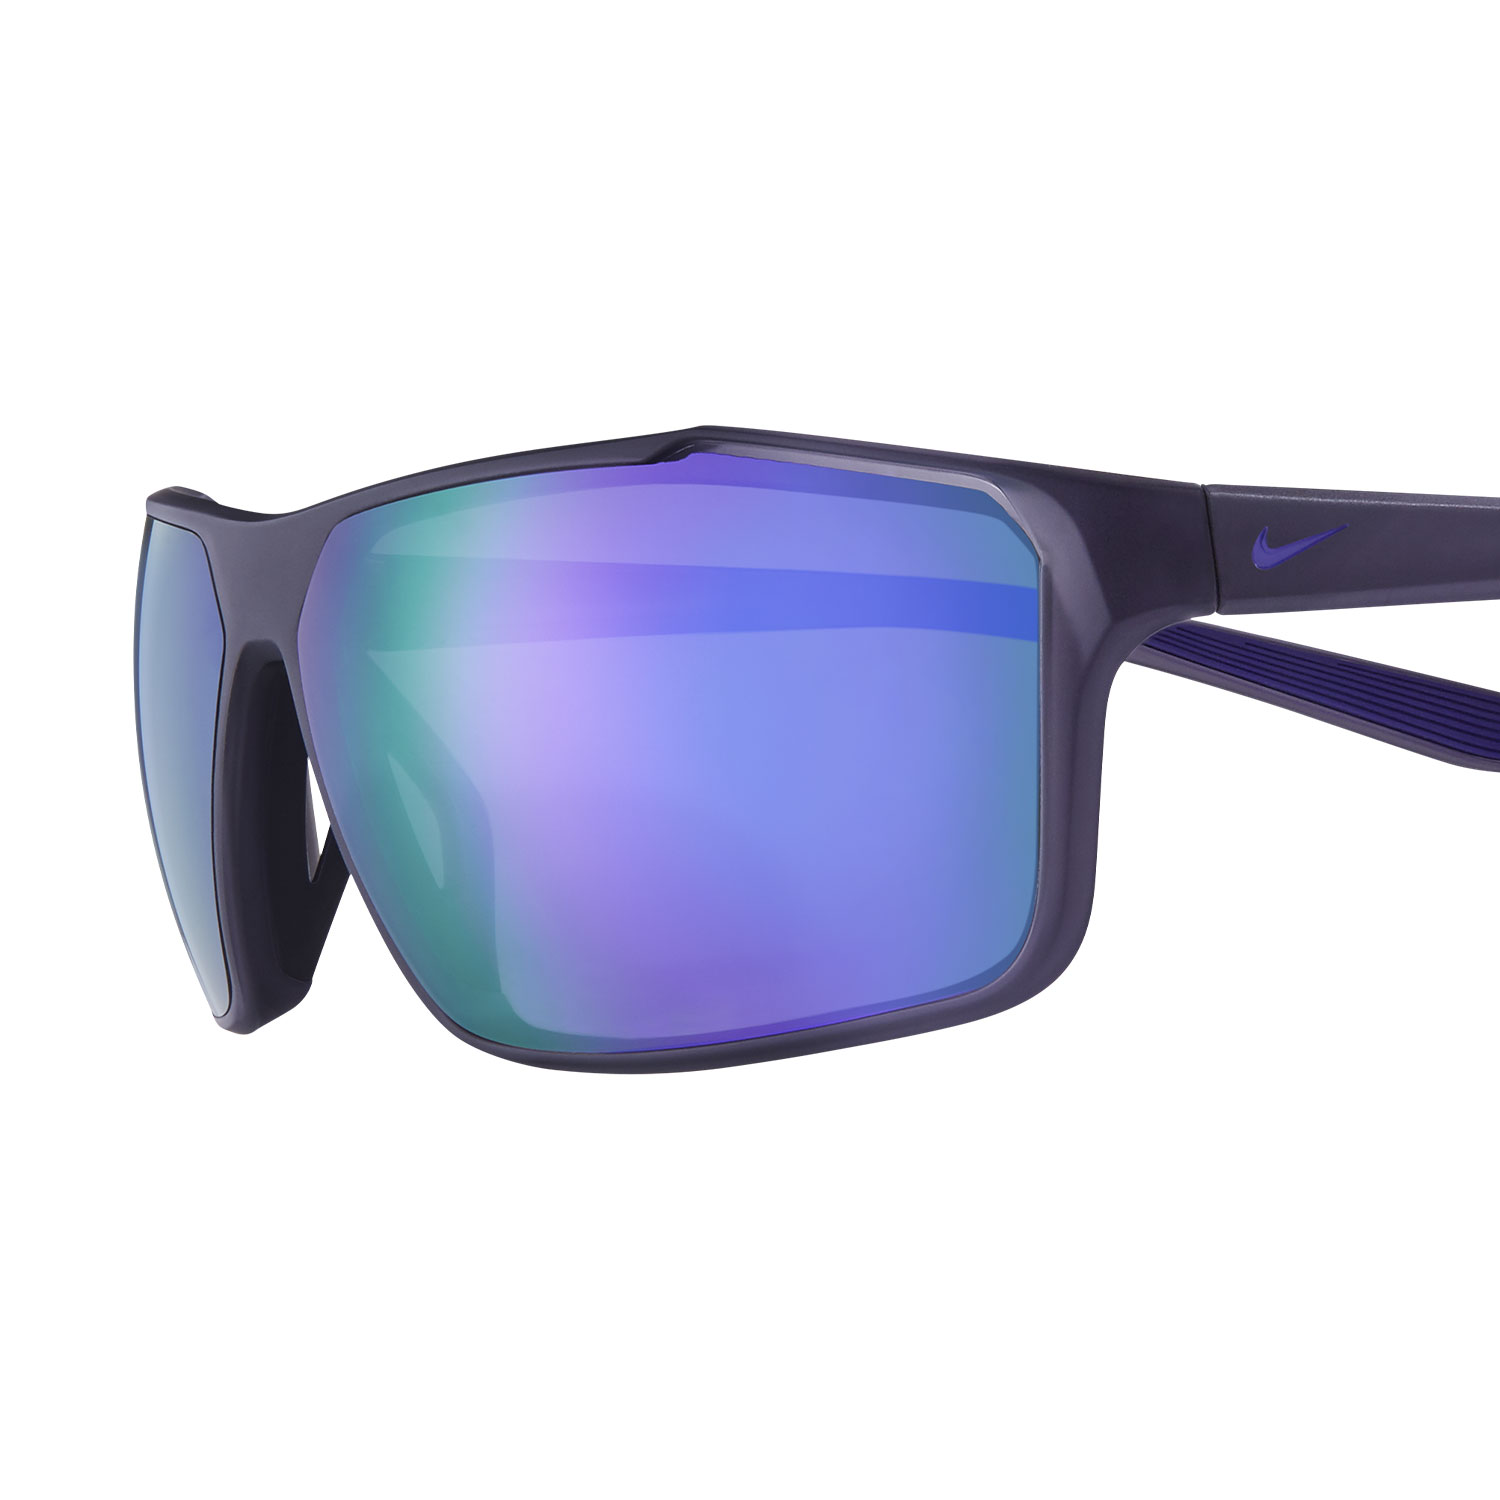 Nike Windstorm Sunglasses - Matte Gridiron/Psychic Purple/Grey W/Violet Mirror Lens